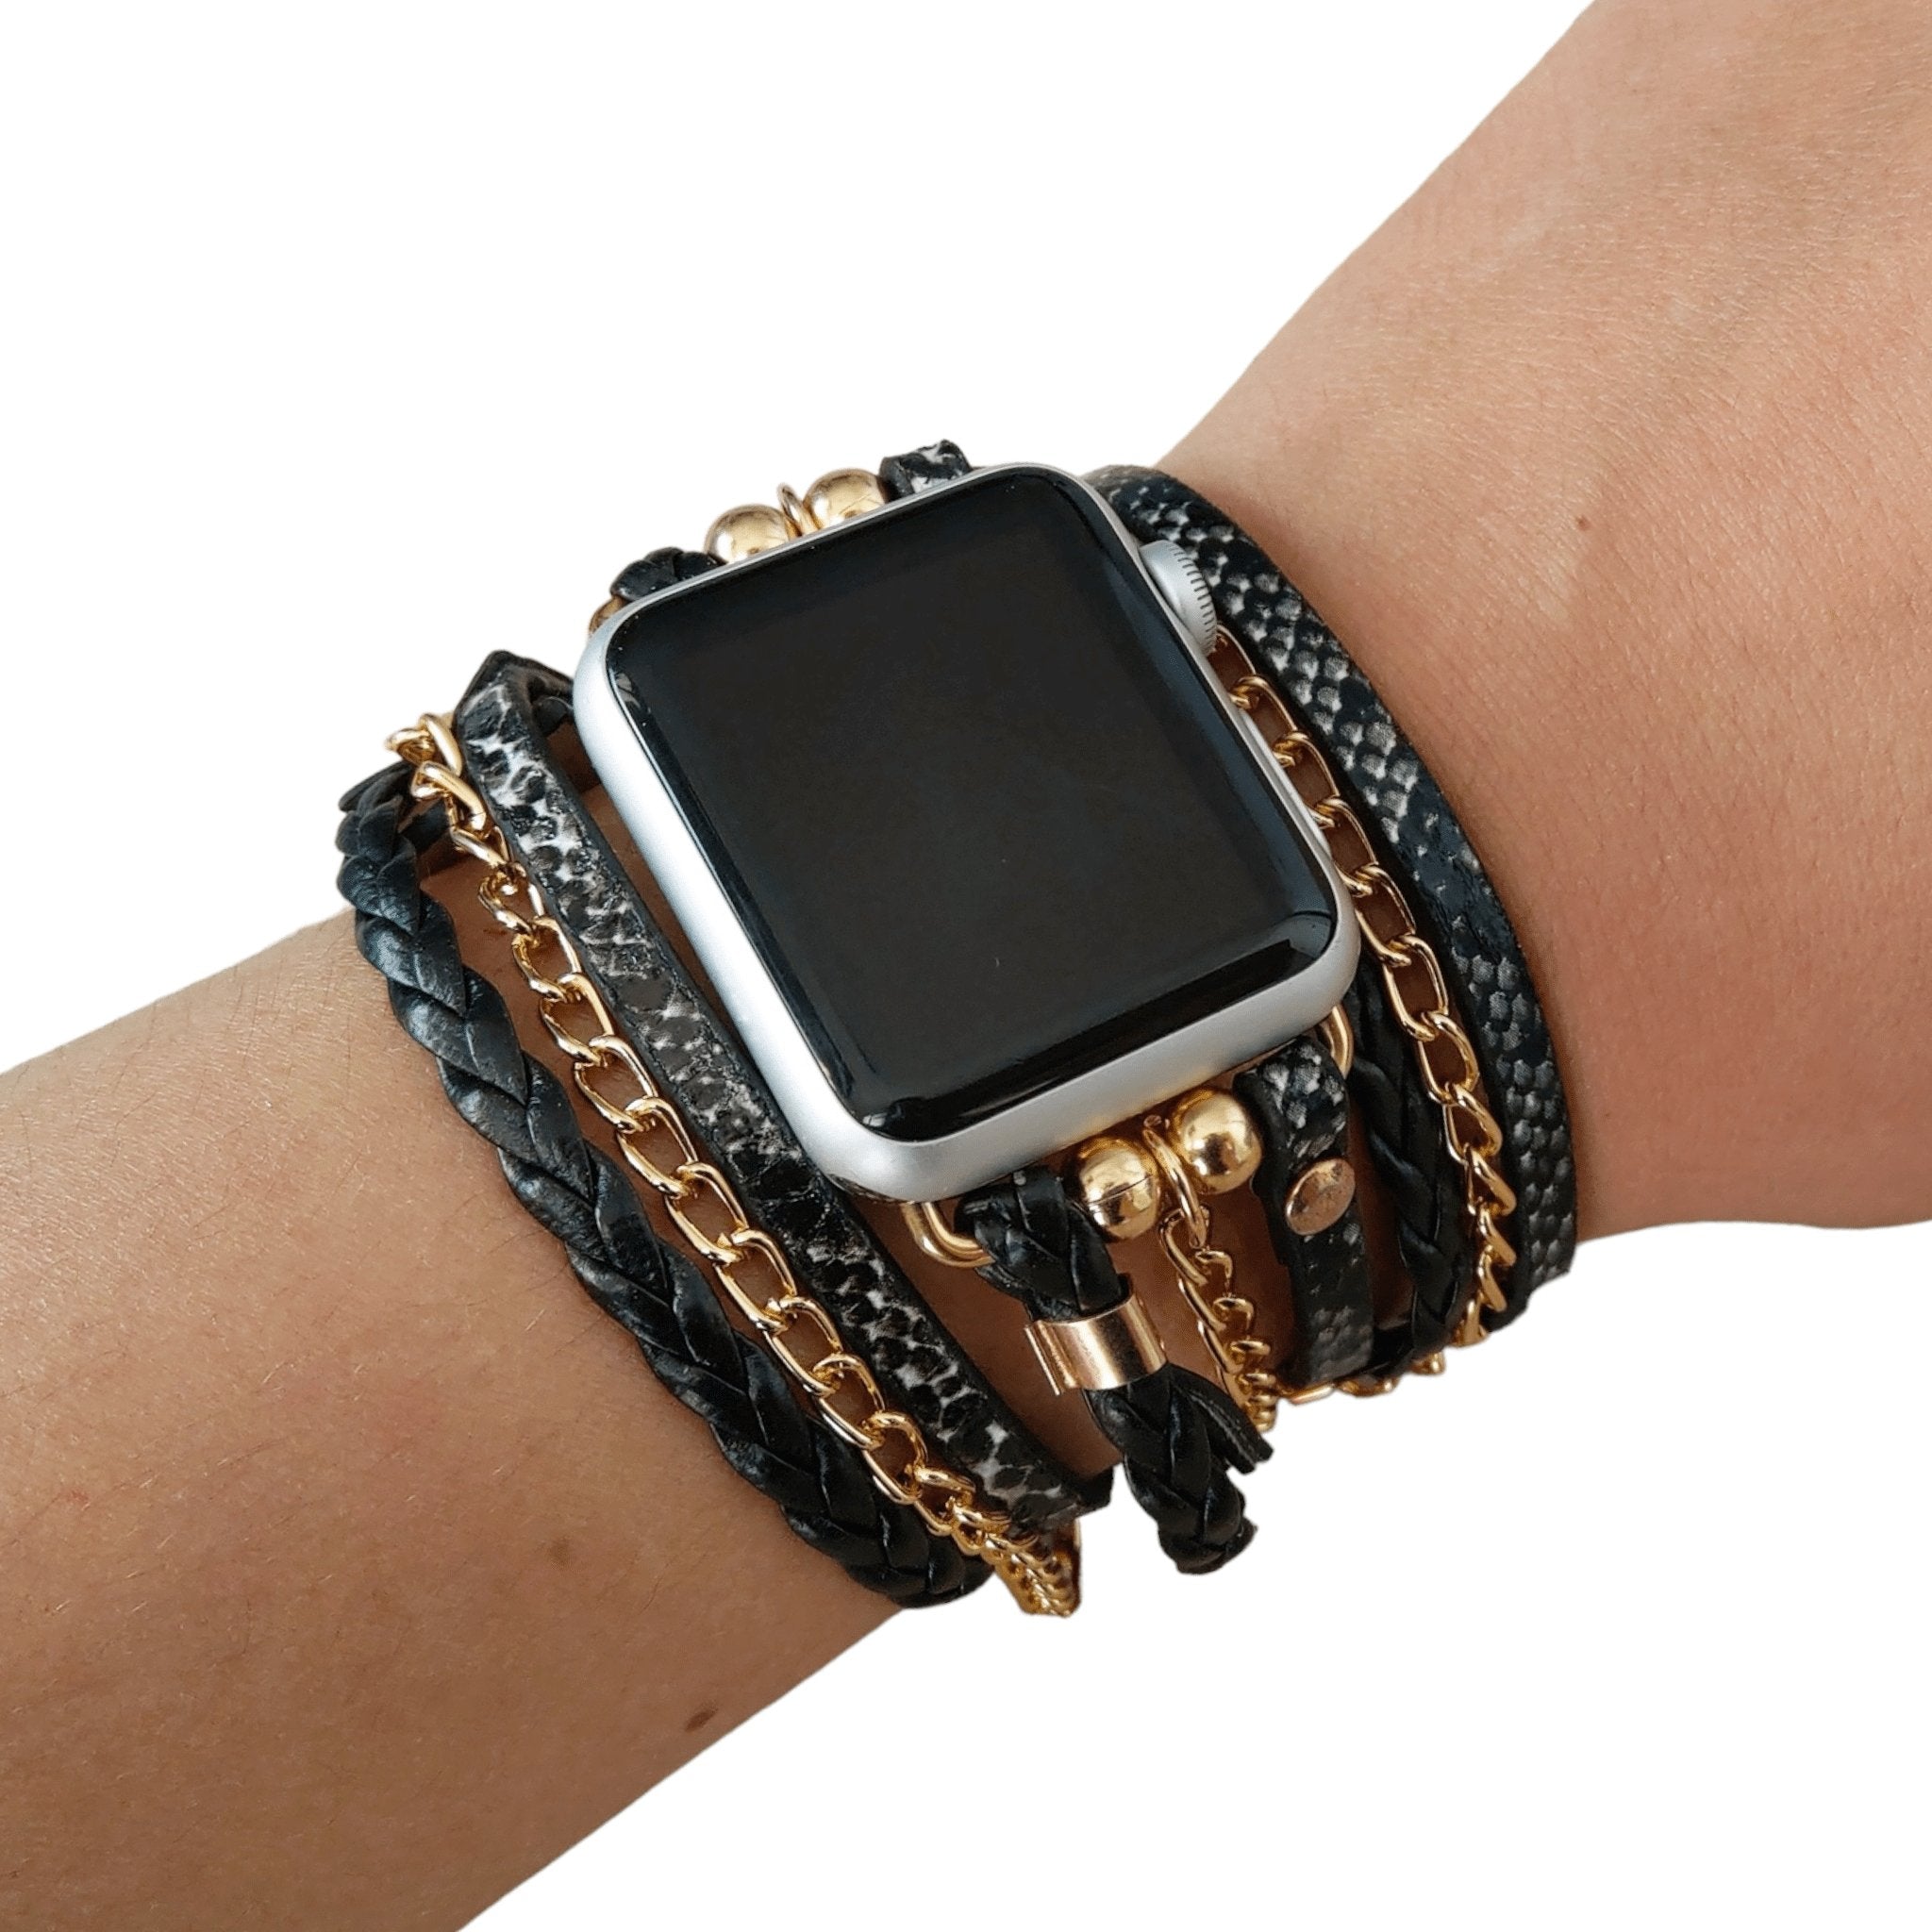 Boho Chic Wrap Snake Print Watch Bracelet band with Gold Chain - Bohemian Style Fashionable Apple Watch Band